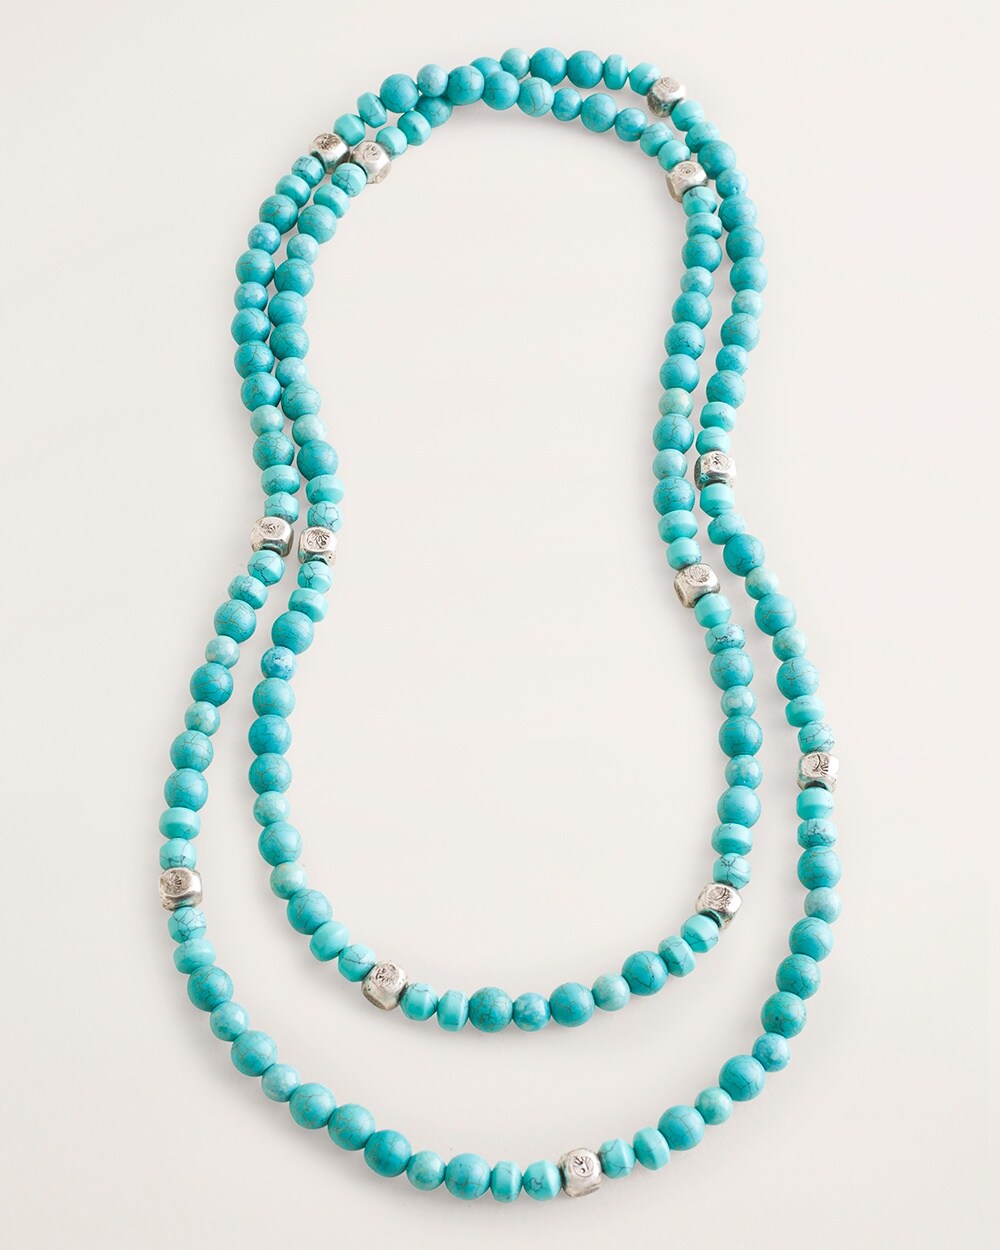 Turquoise-Hued Single-Strand Necklace